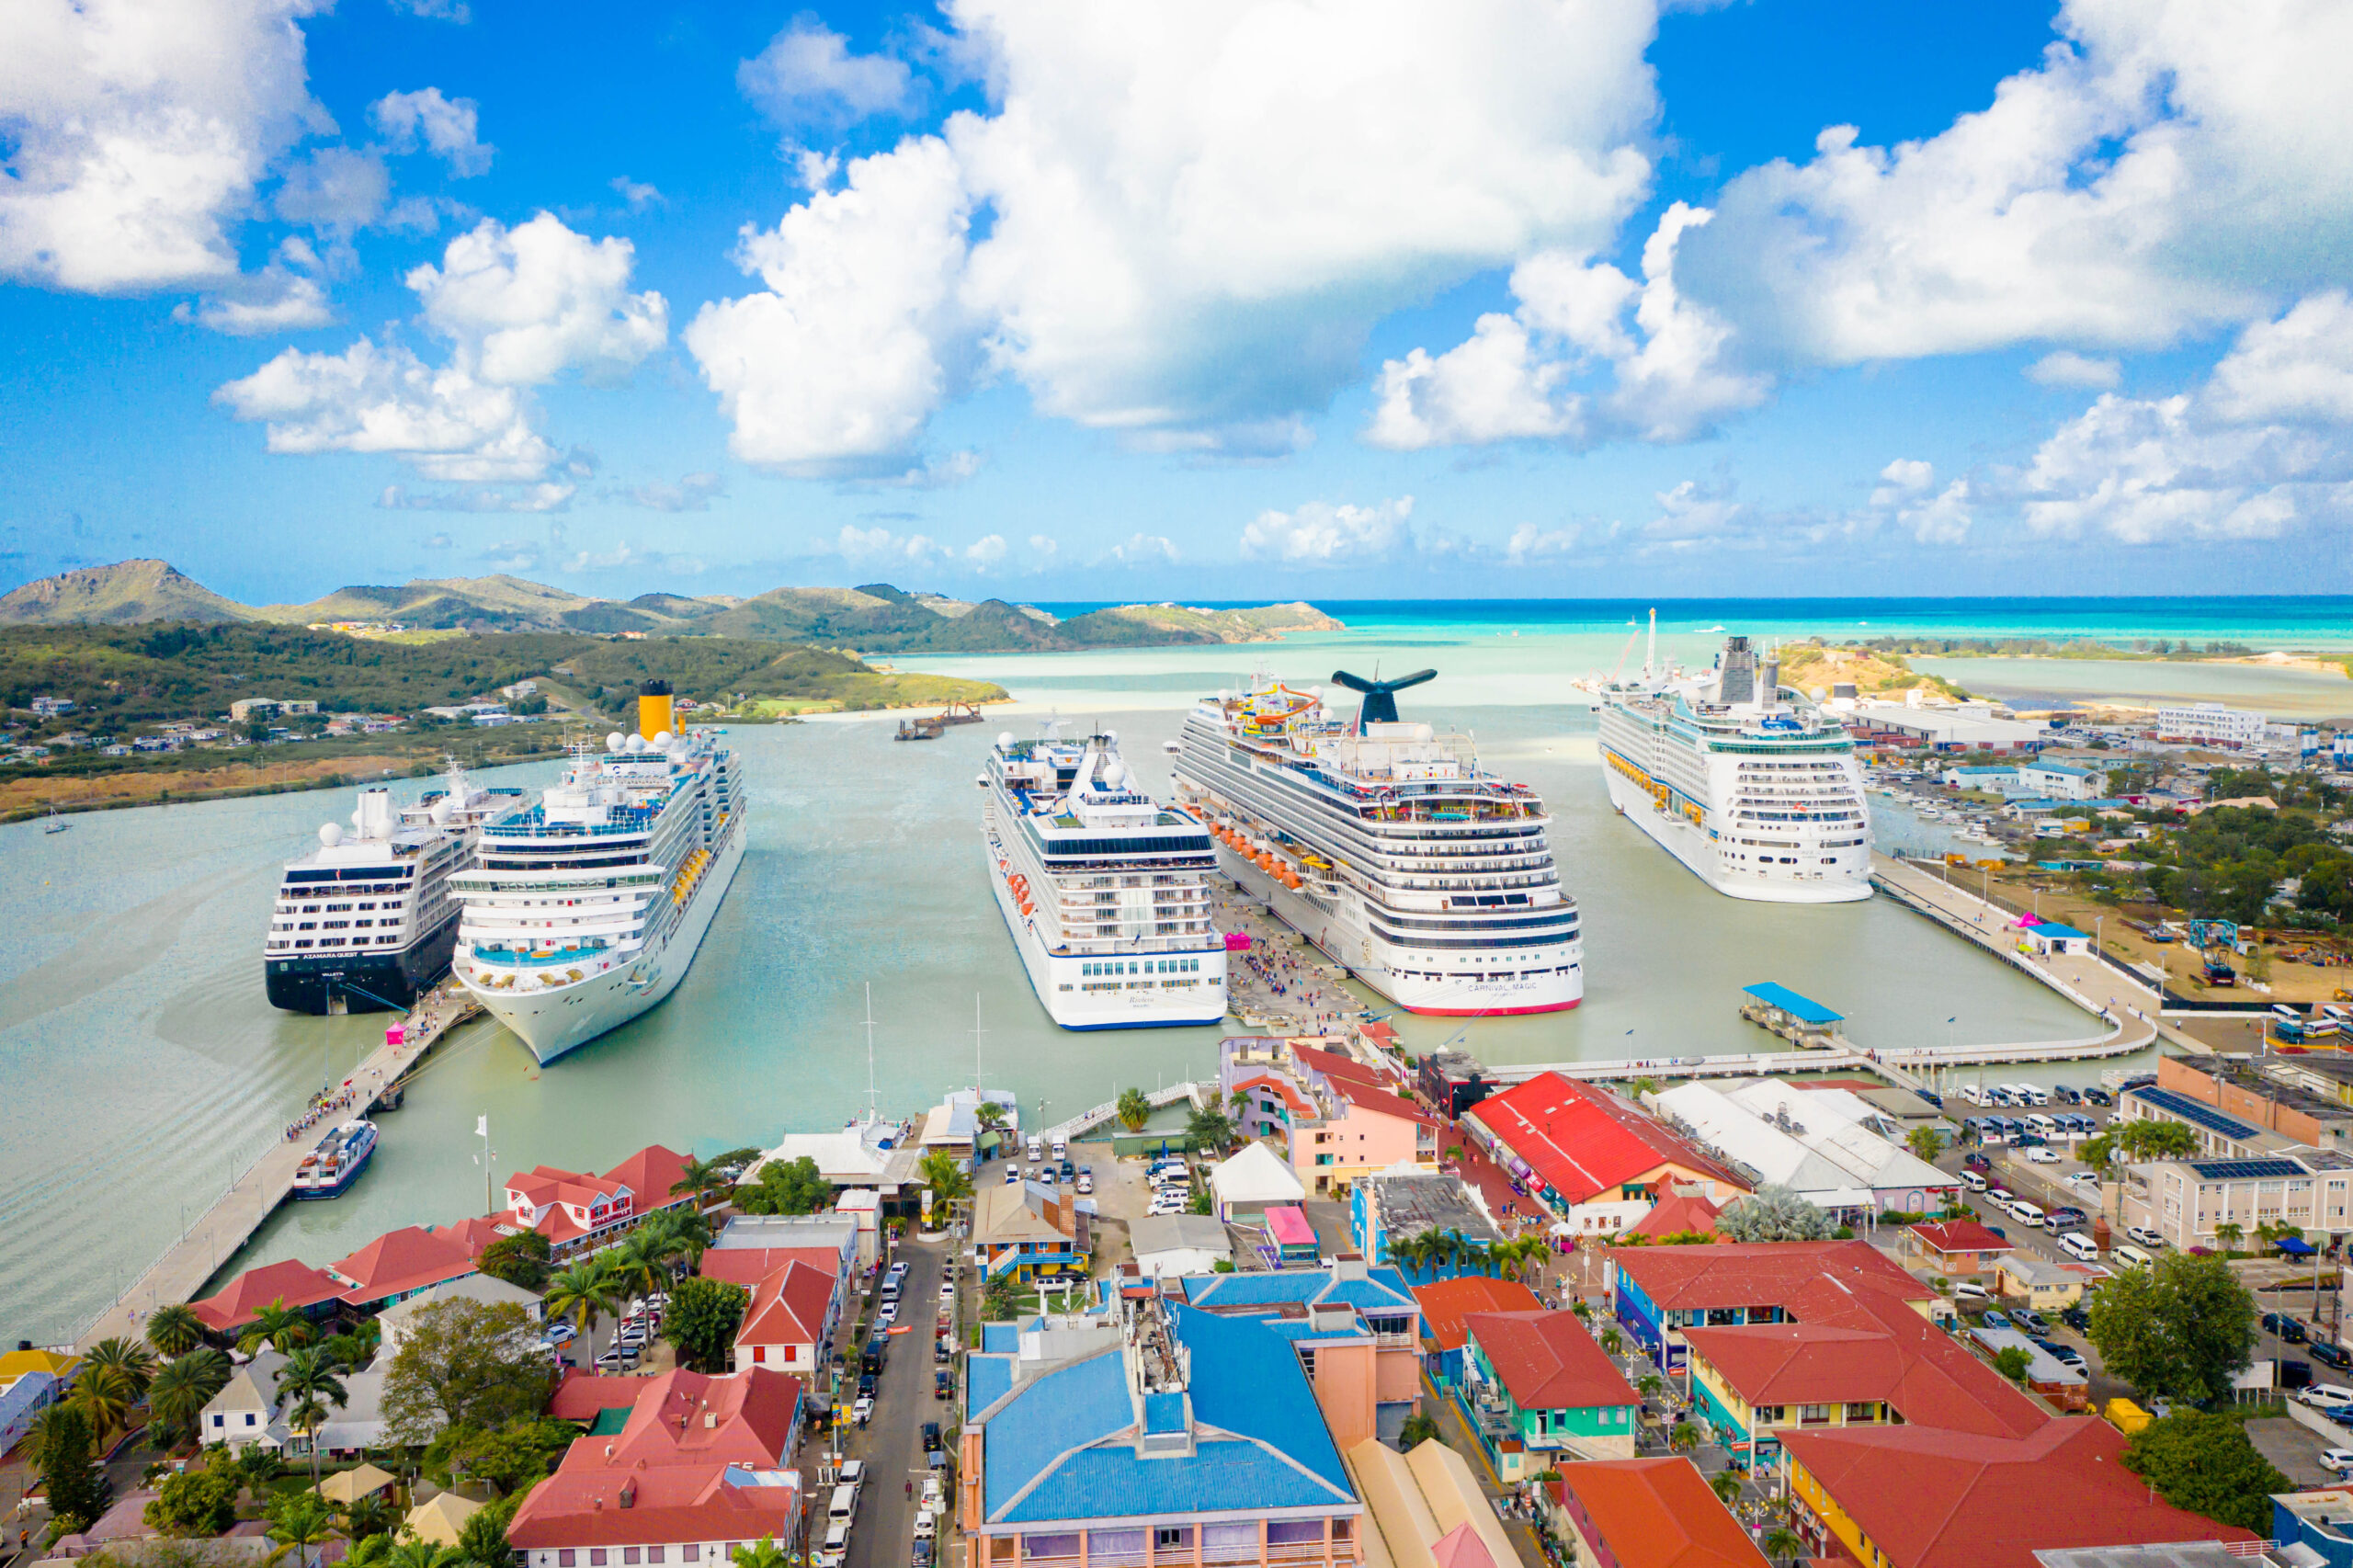 Antigua Cruise Port projects a promising cruise season 2022- 2023